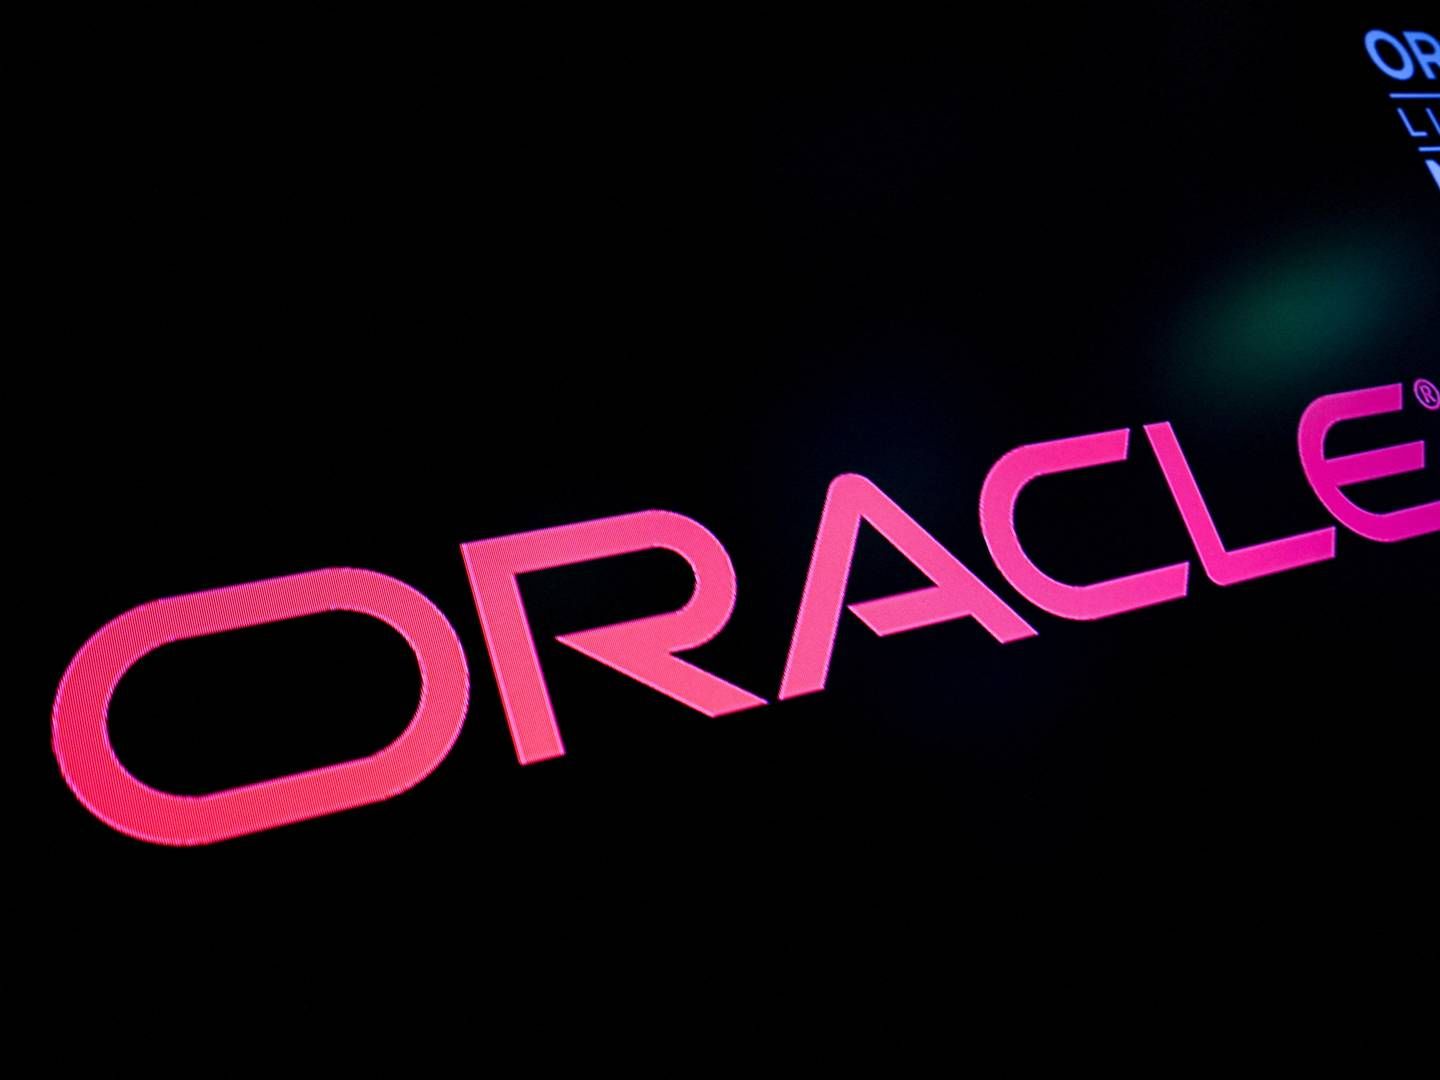 Oracles aktikurs steg i tirsdagens eftermarked i USA med 8,2 pct. | Foto: Brendan Mcdermid/Reuters/Ritzau Scanpix